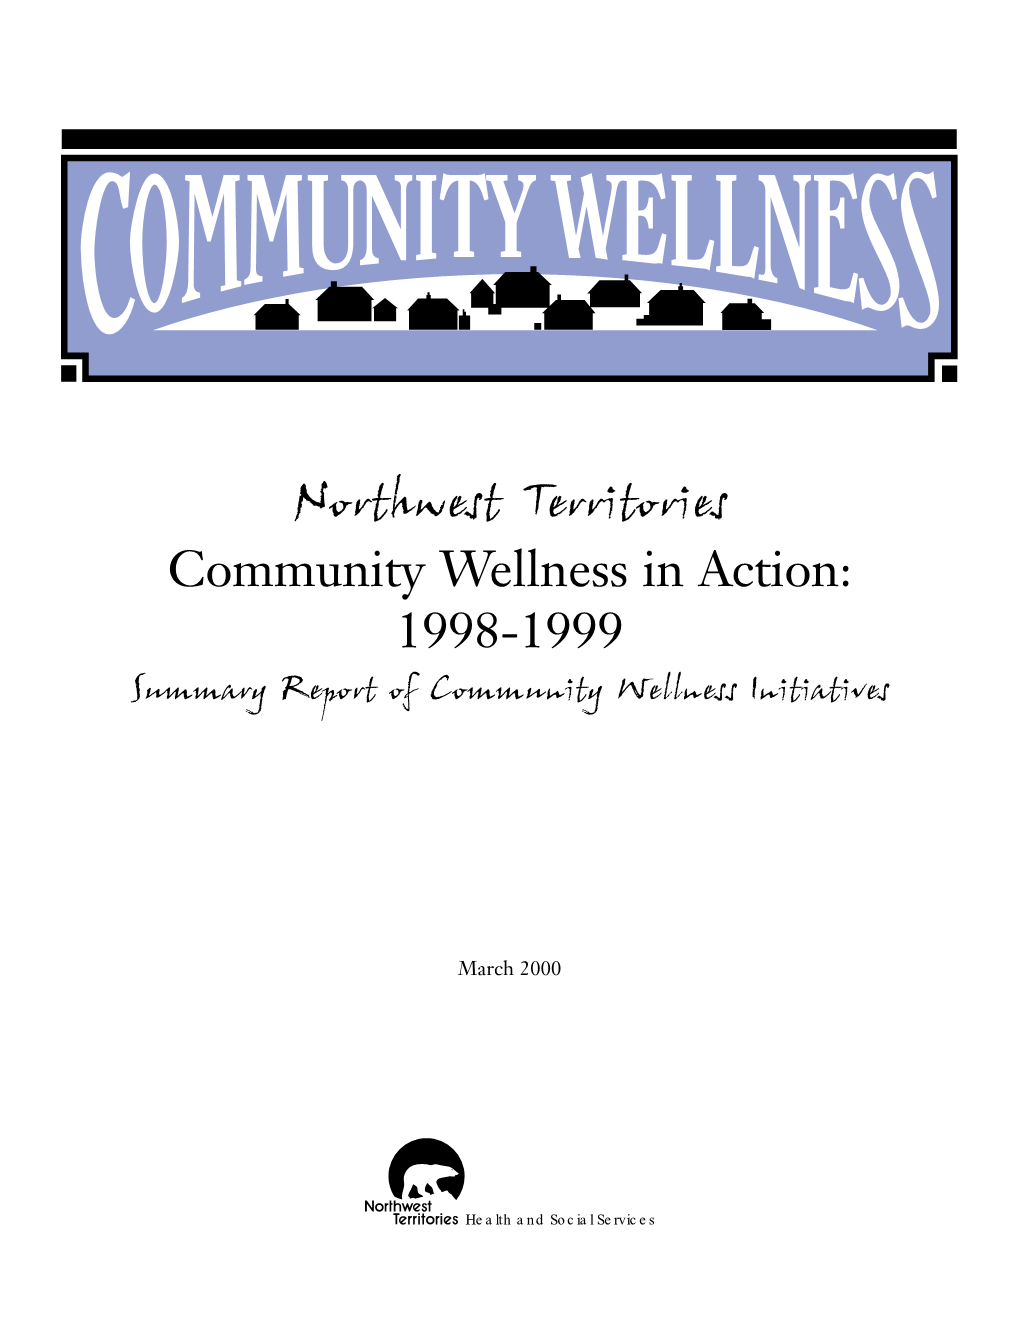 Northwest Territories Community Wellness in Action: 1998-1999 Summary Report of Community Wellness Initiatives